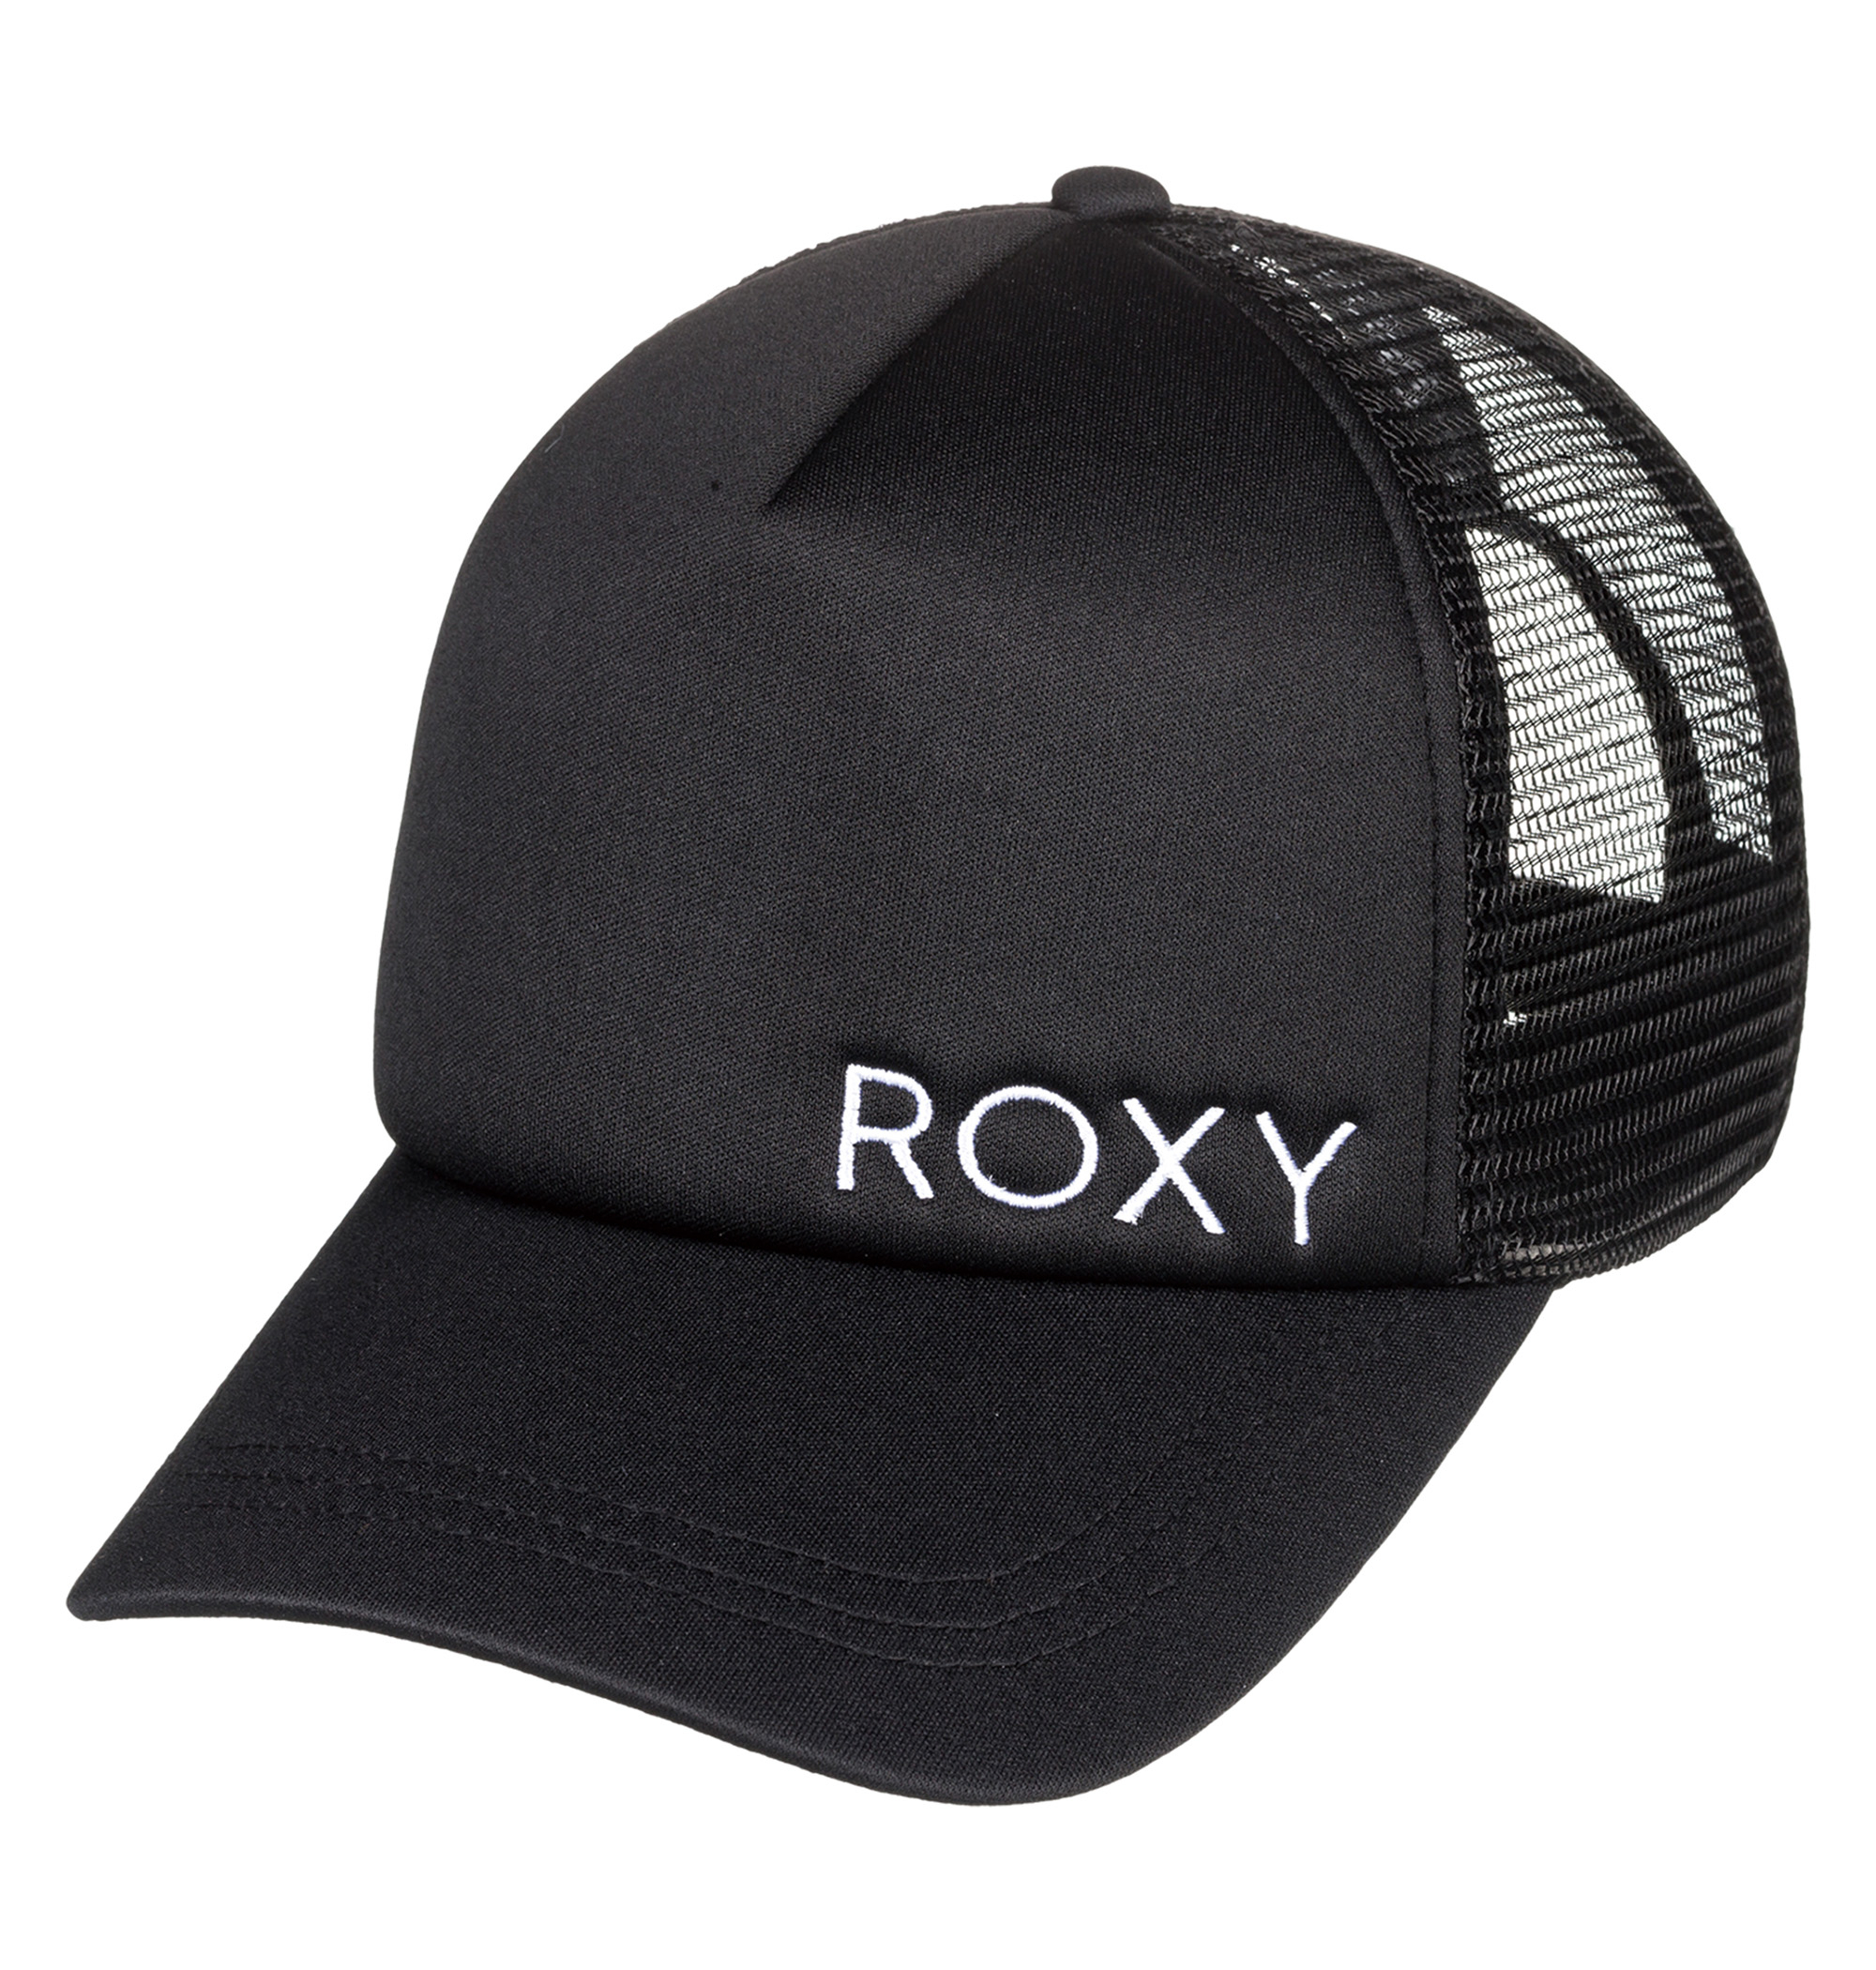 ＜Roxy＞FINISHLINE 2 BLACK 程よくカジュアル感を漂わせるブランドロゴがアクセントになったキャップ画像